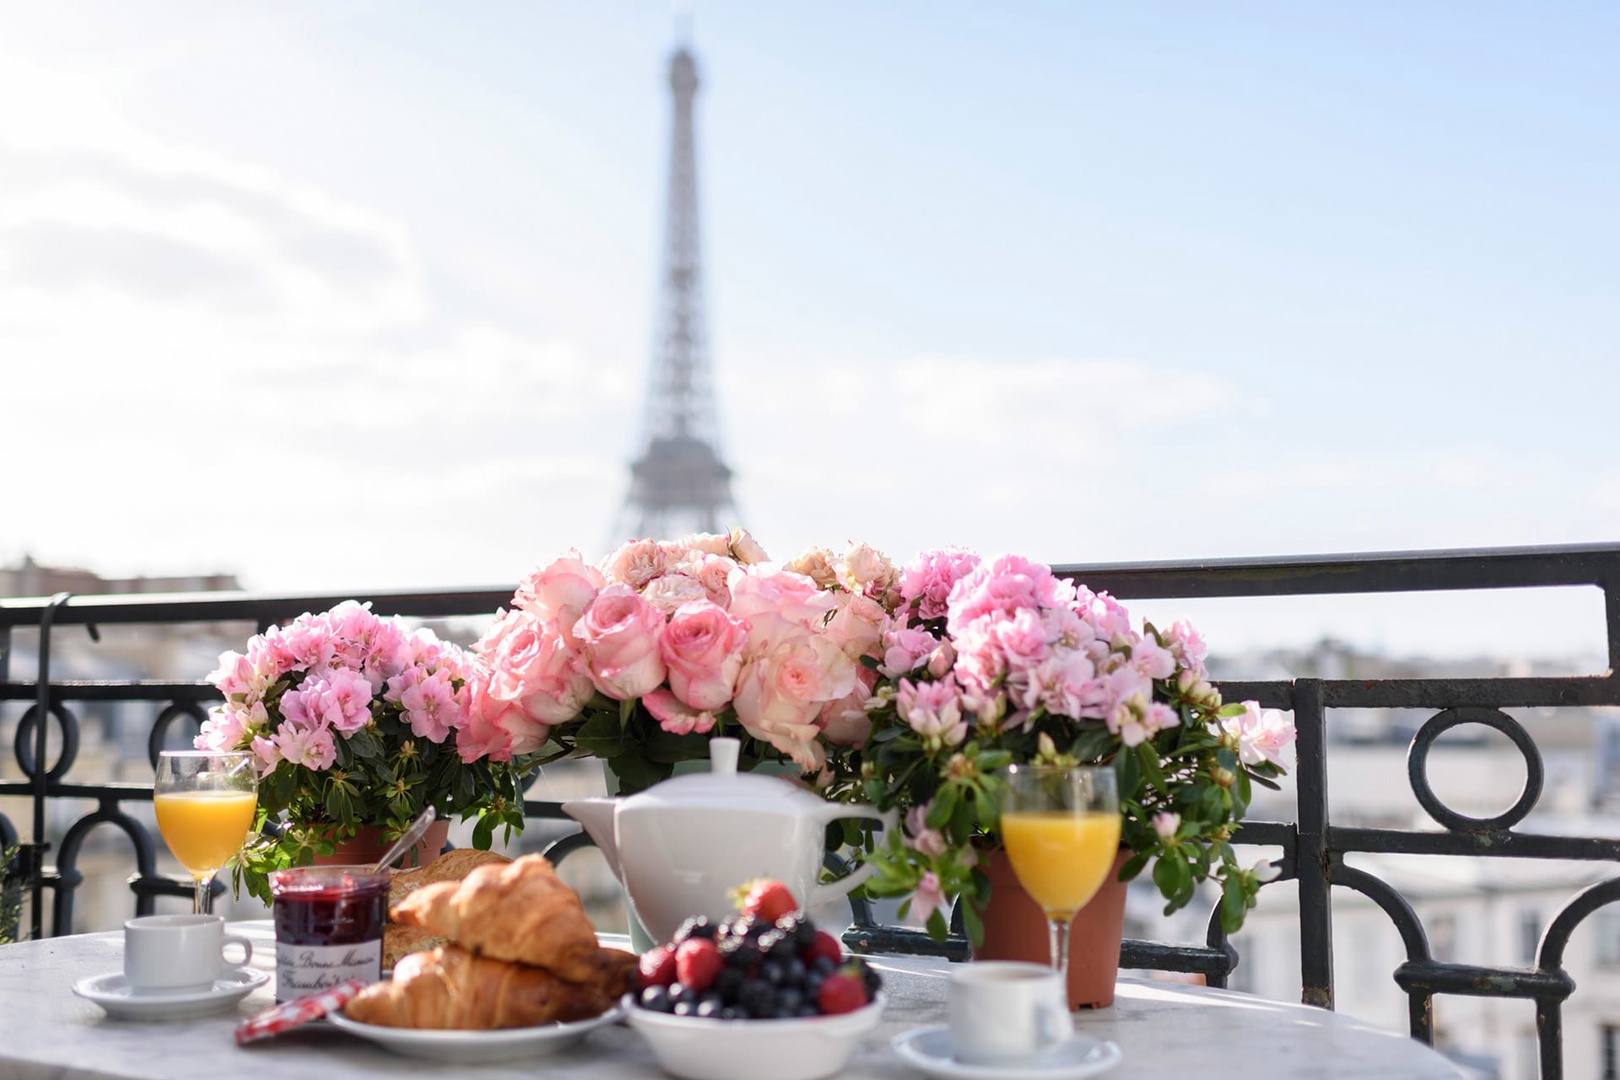 Treat yourself to al fresco breakfasts with breathtaking views!